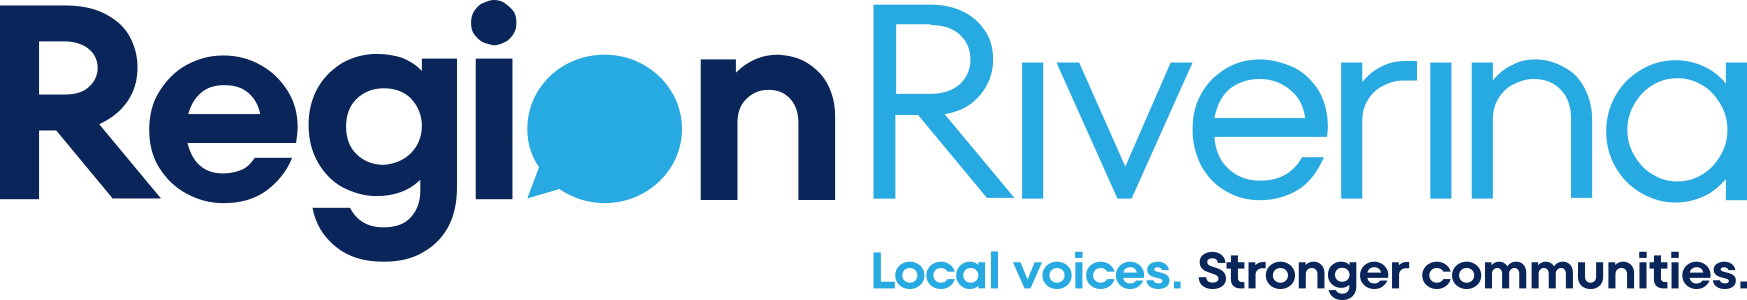 Region Riverina logo